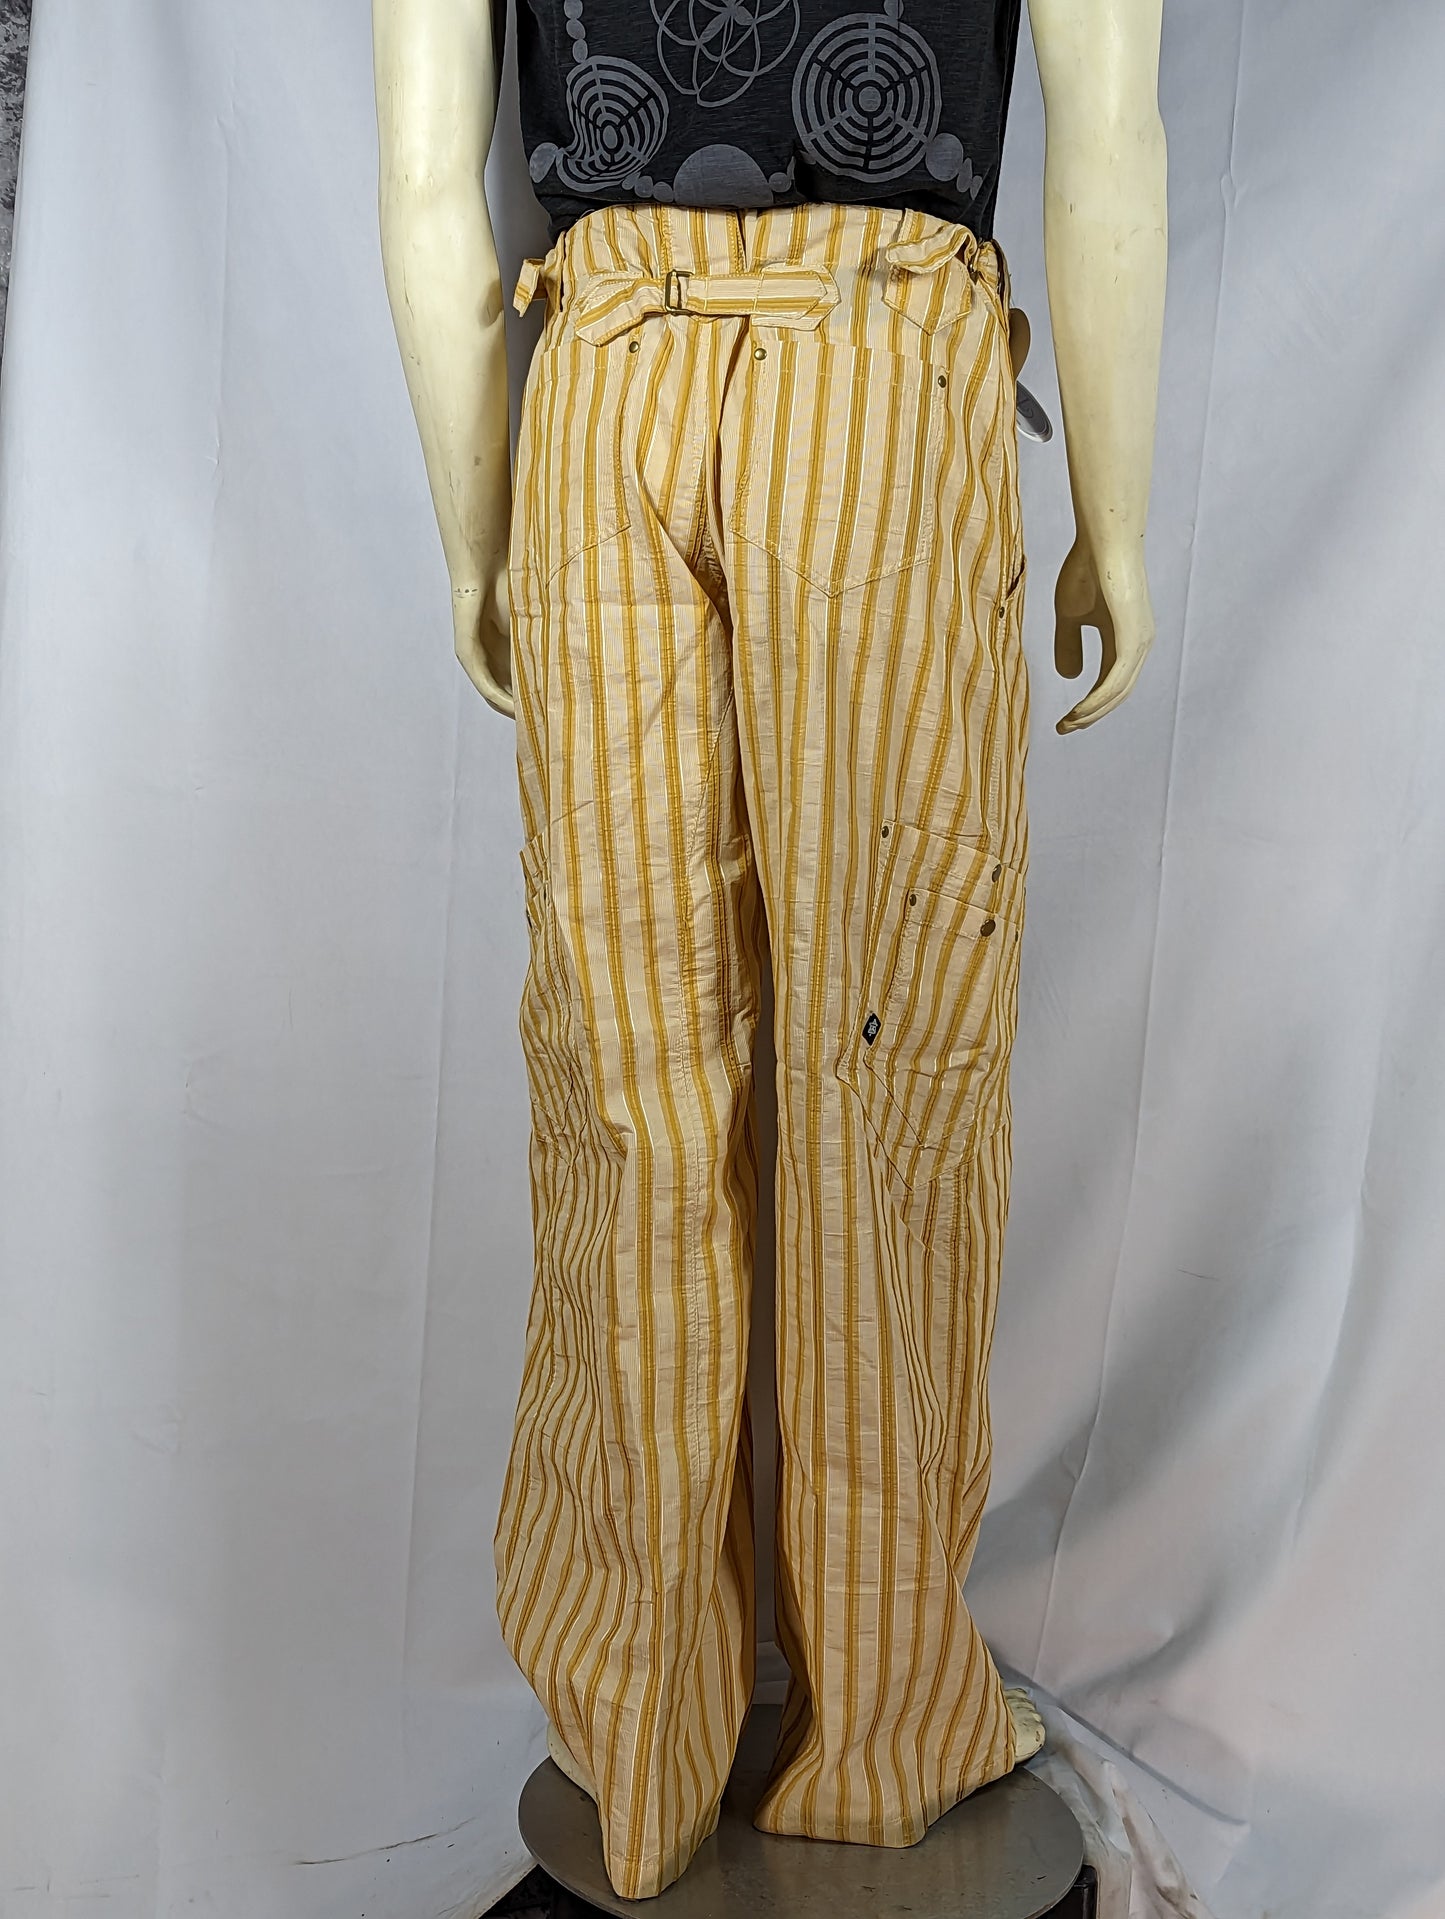 Striped Sundance Pants